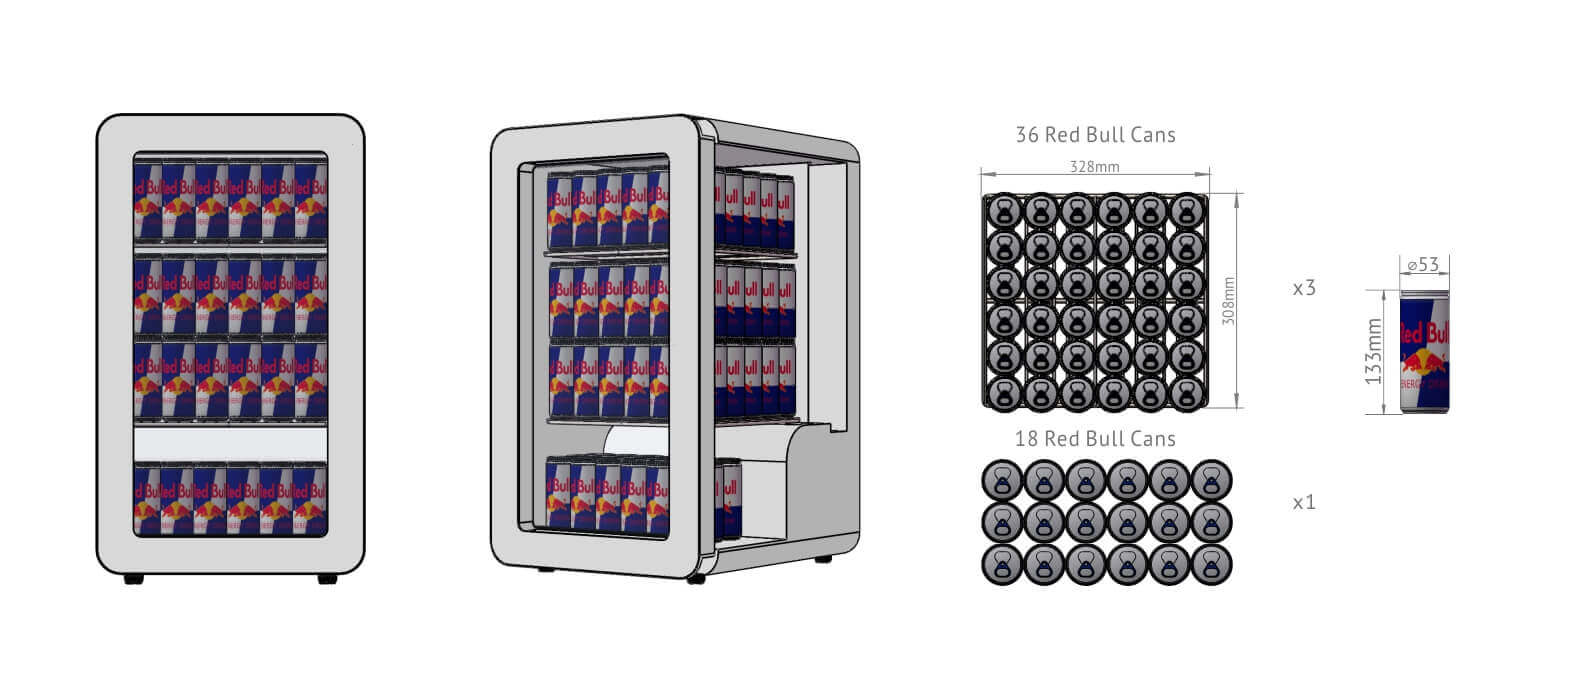 Procool Retro Mini Fridge Cooler Retro-80 Pack-out_Red Bull 250ml Cans